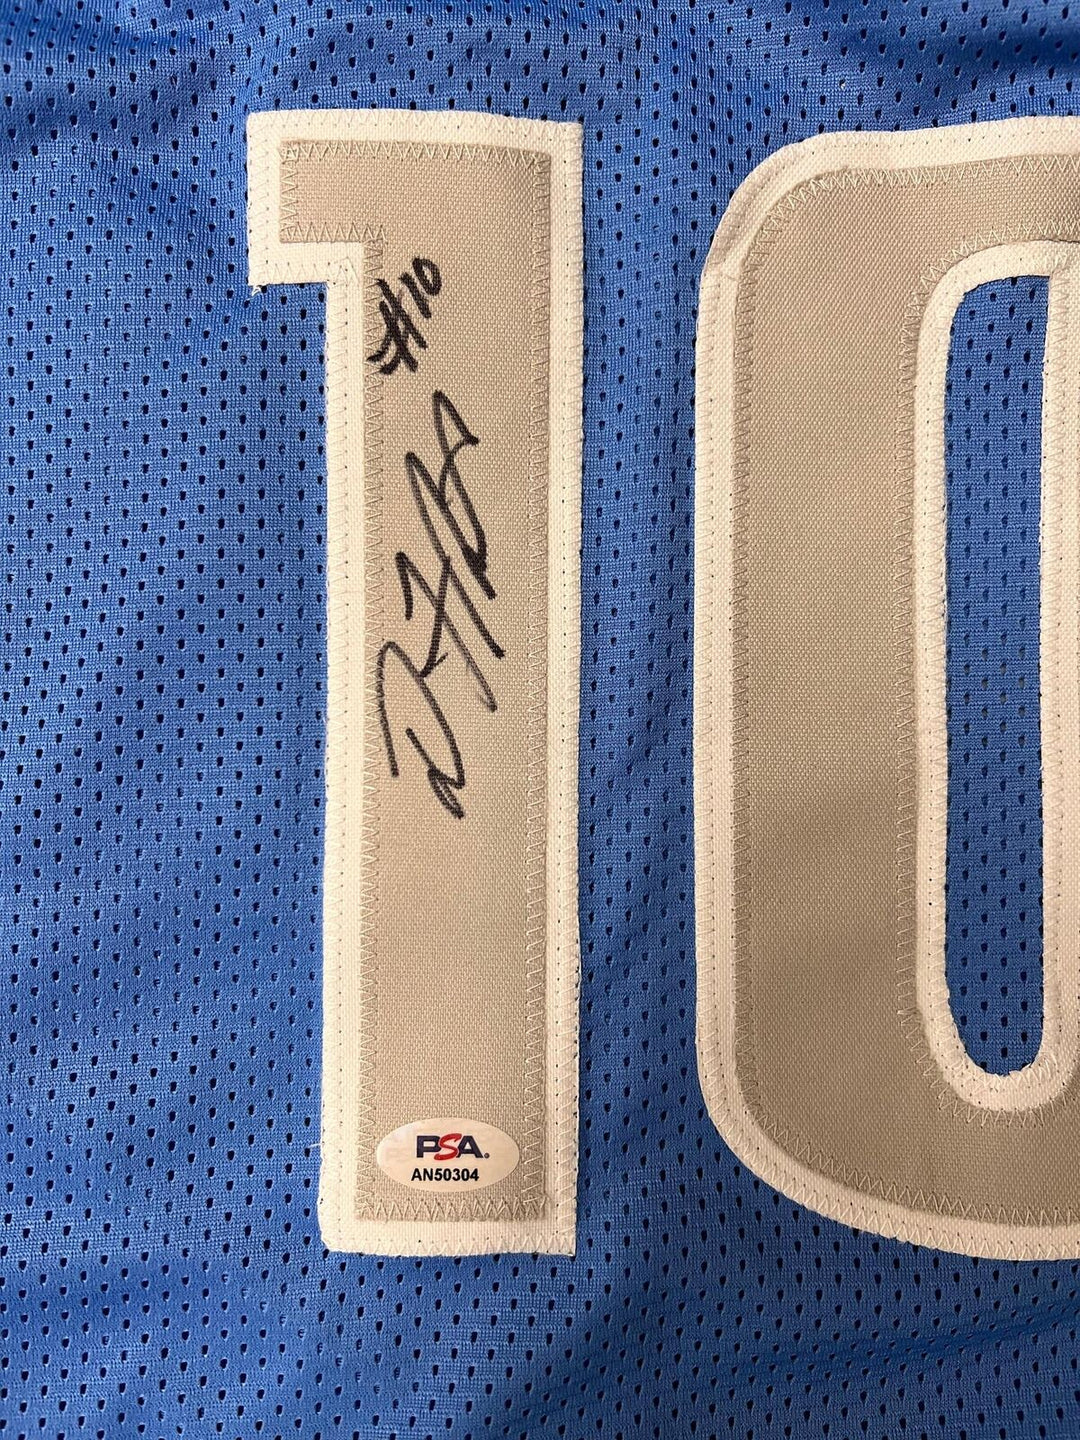 Dorian Finney-Smith signed jersey PSA/DNA Dallas Mavericks Autographed Image 2